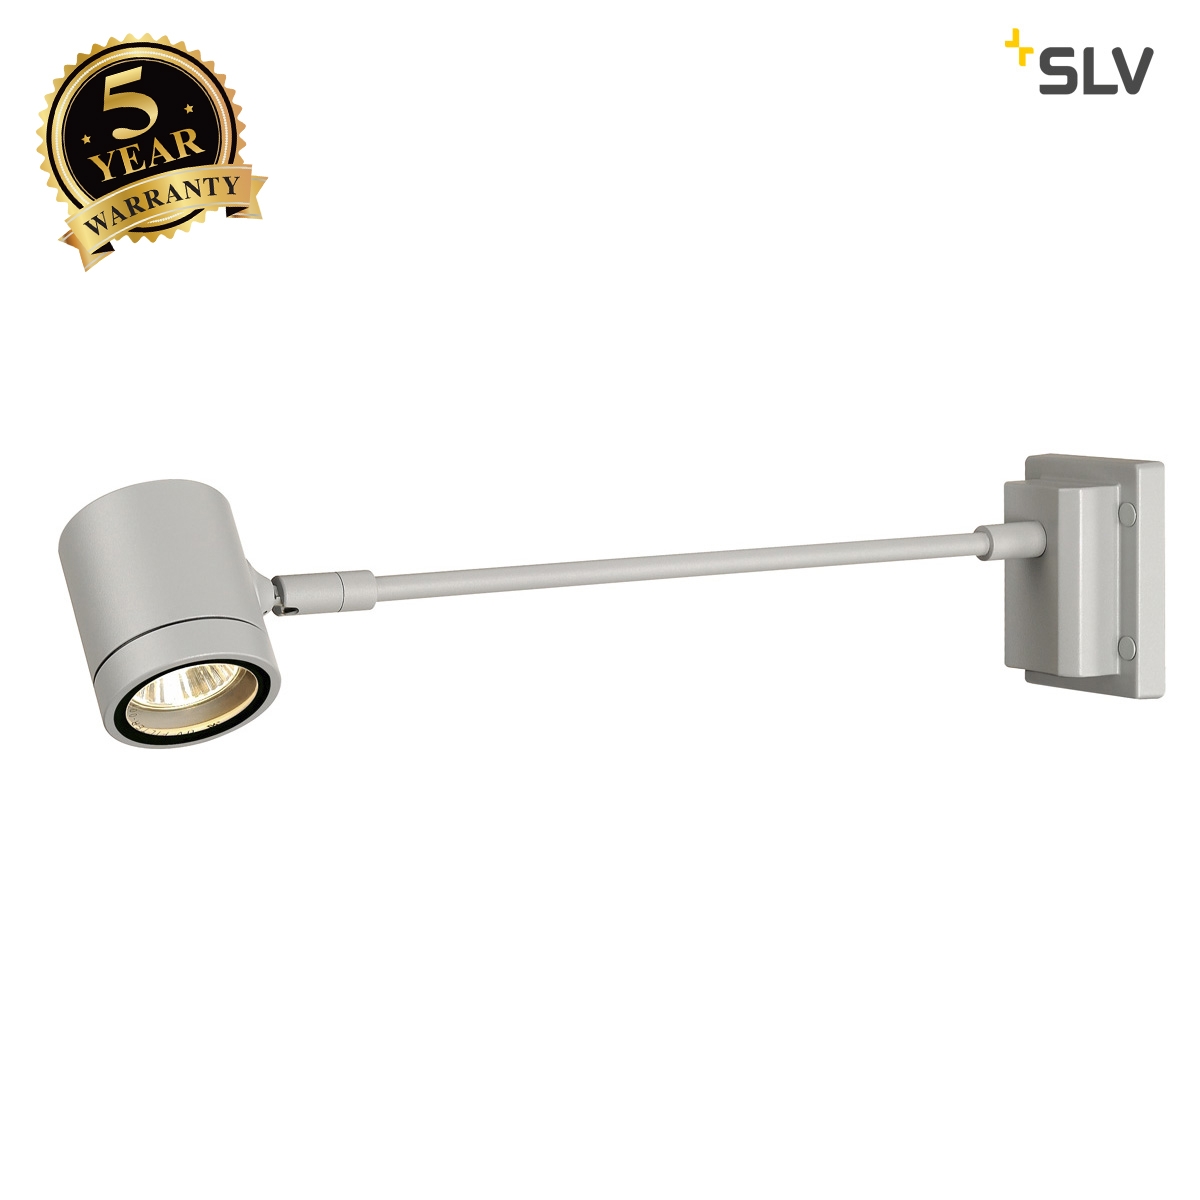 SLV NEW MYRA DISPLAY STRAIGHT, silver-grey, GU10, max. 50W, IP55 233124